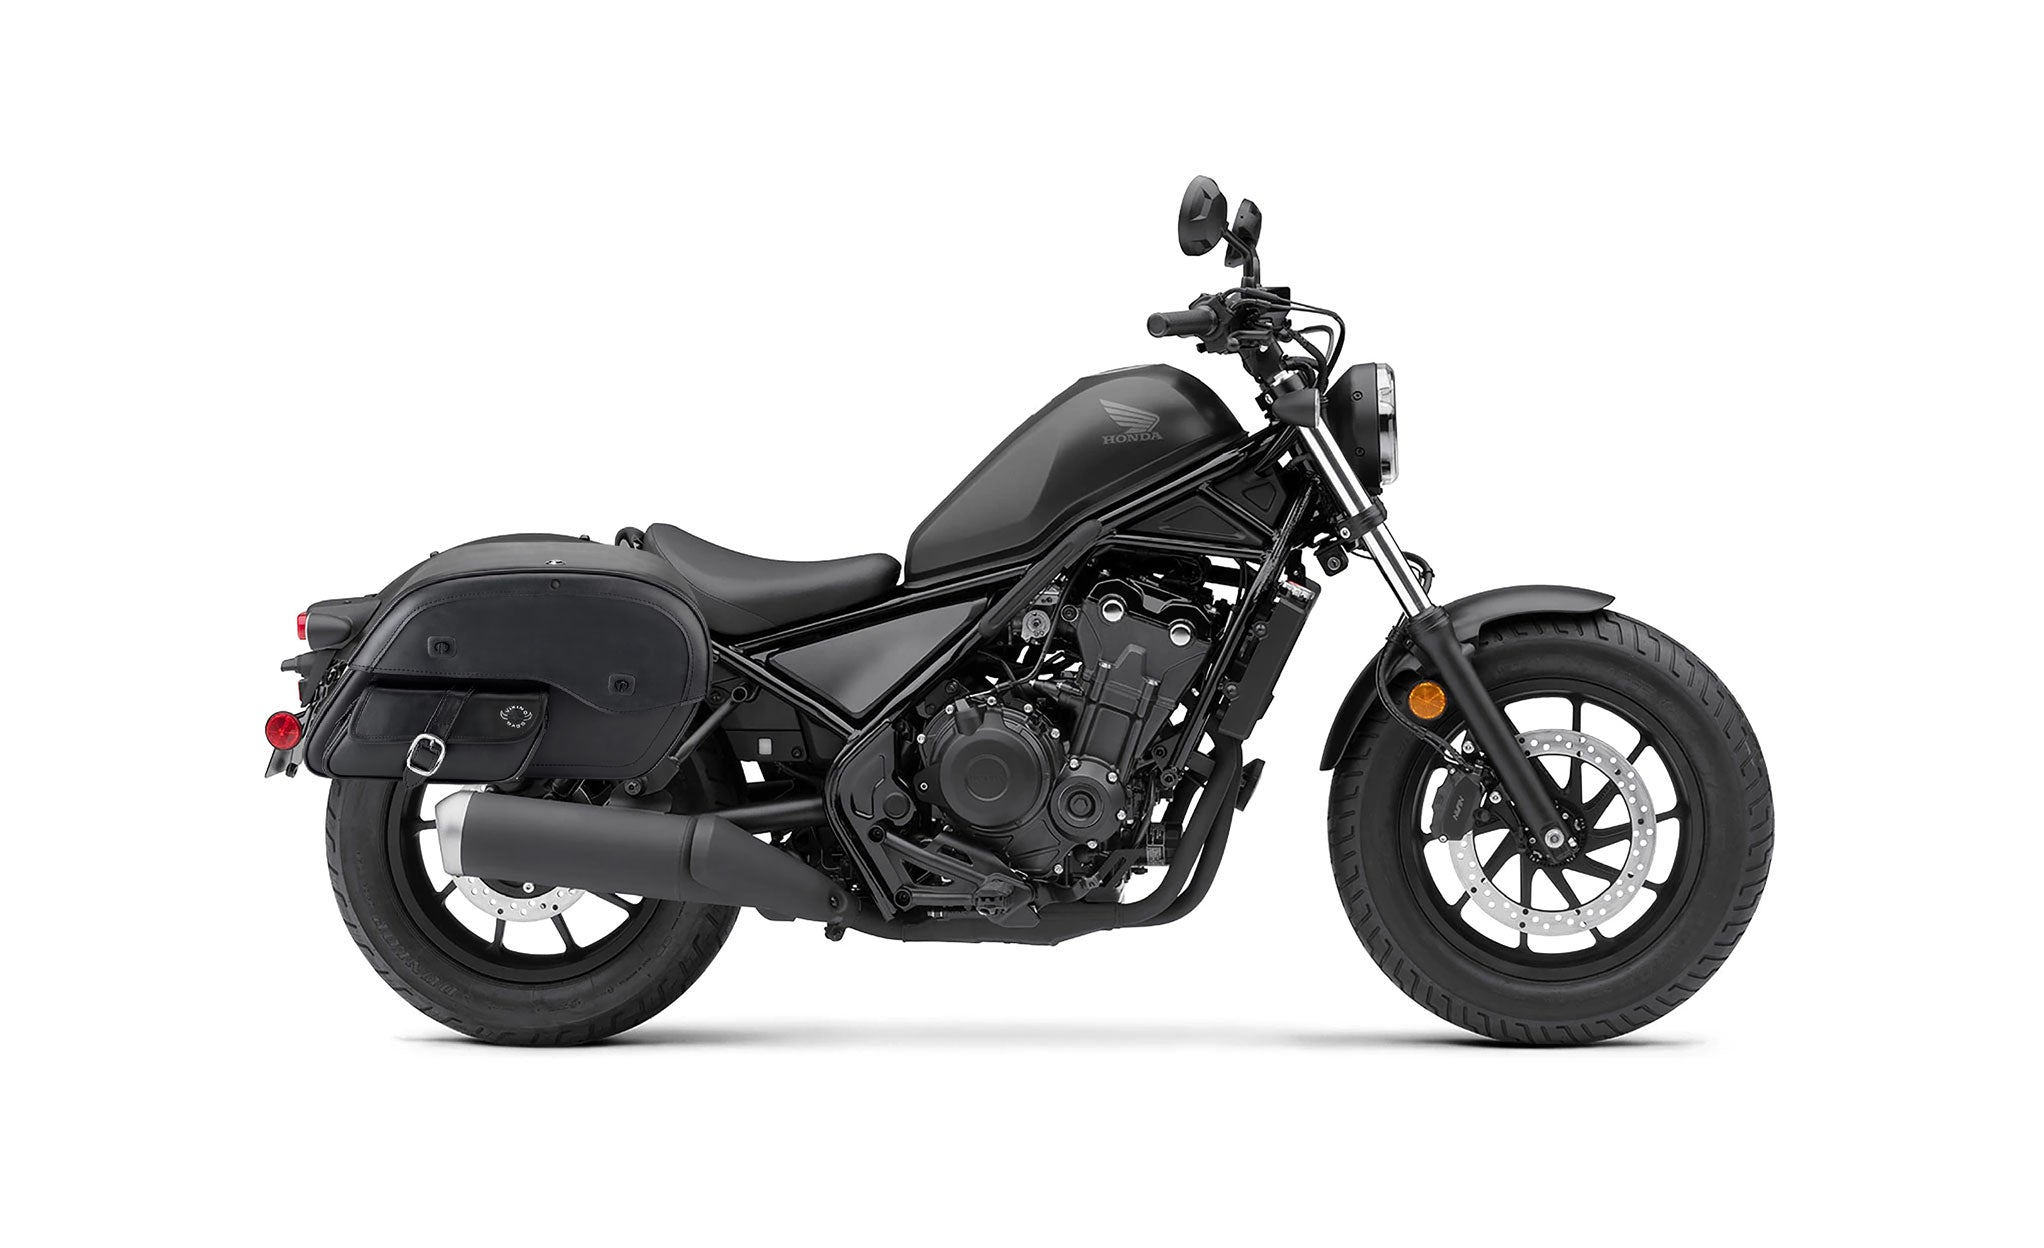 Viking Essential Side Pocket Large Honda Rebel 500 Shock Cutout Leather Motorcycle Saddlebags on Bike Photo @expand